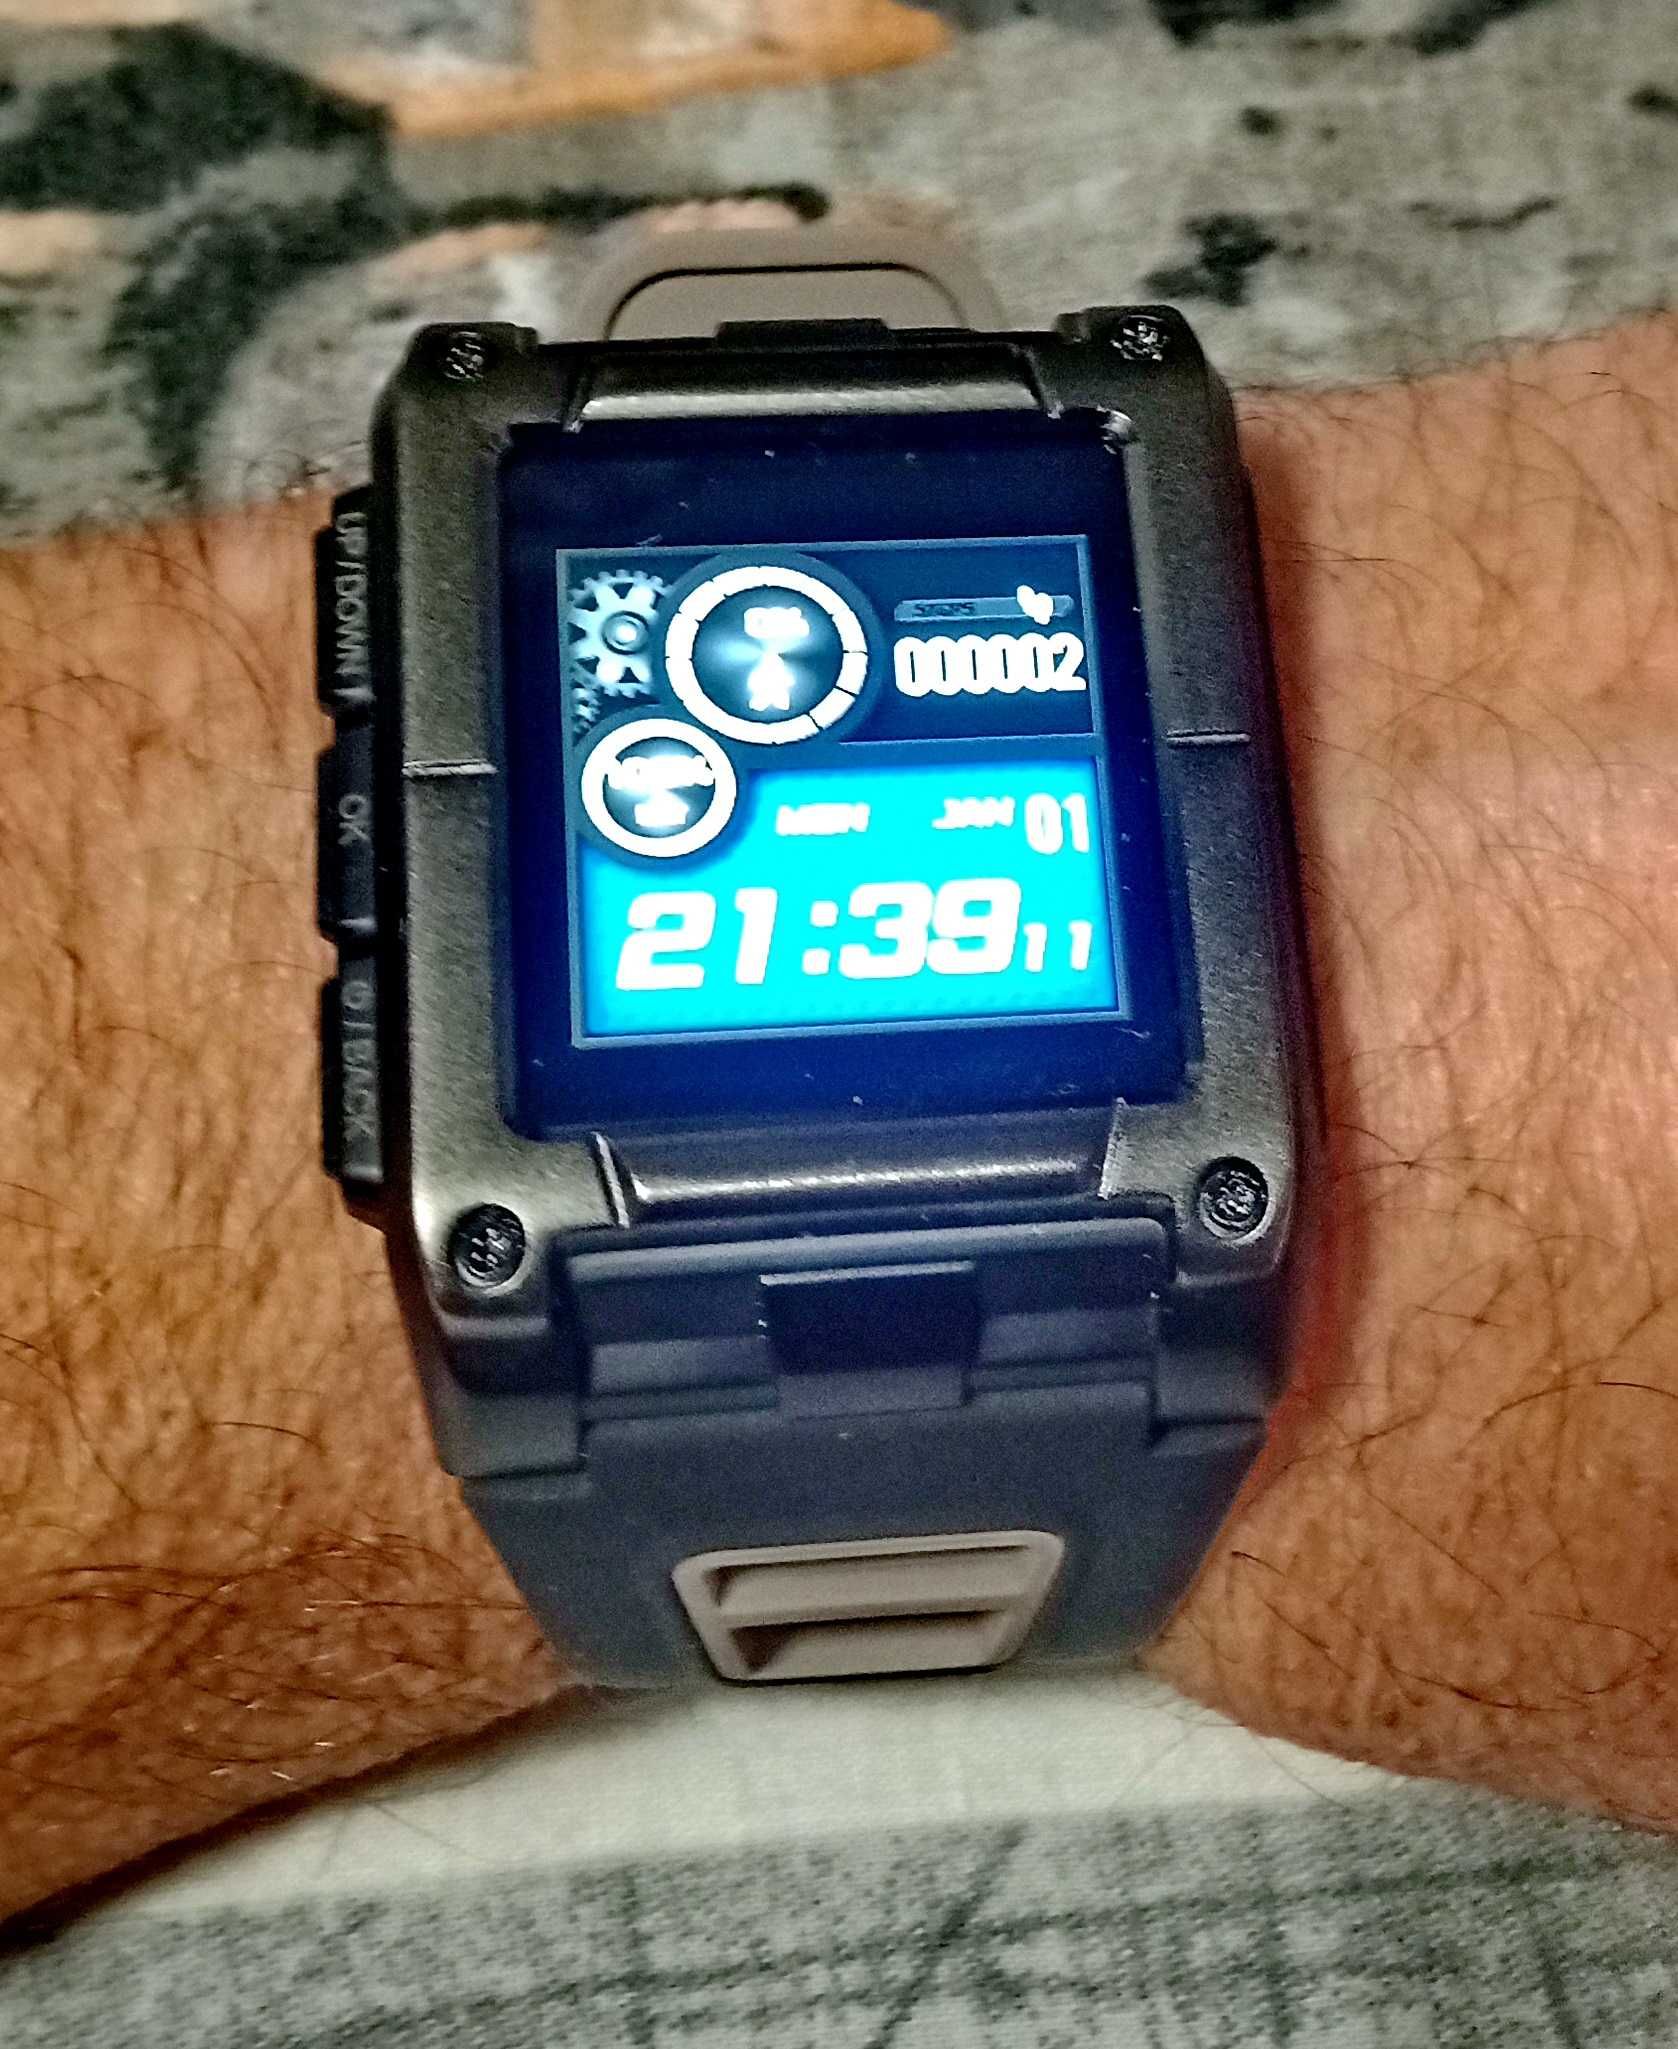 Смарт-часы S929  поменяю на Часы настенные с боем Янтарь  ОЧЗ.